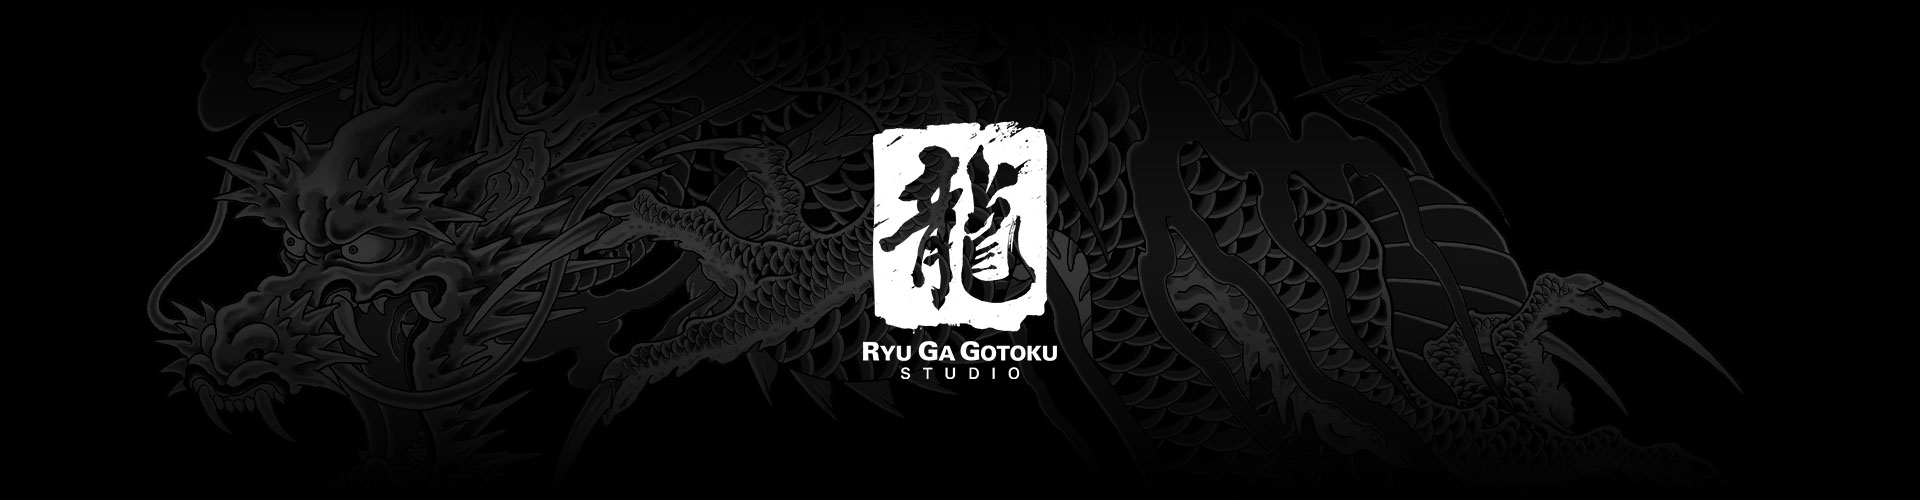 Ryu Ga Gotoku Studio-logotyp med en grå draktatuering som bakgrund.